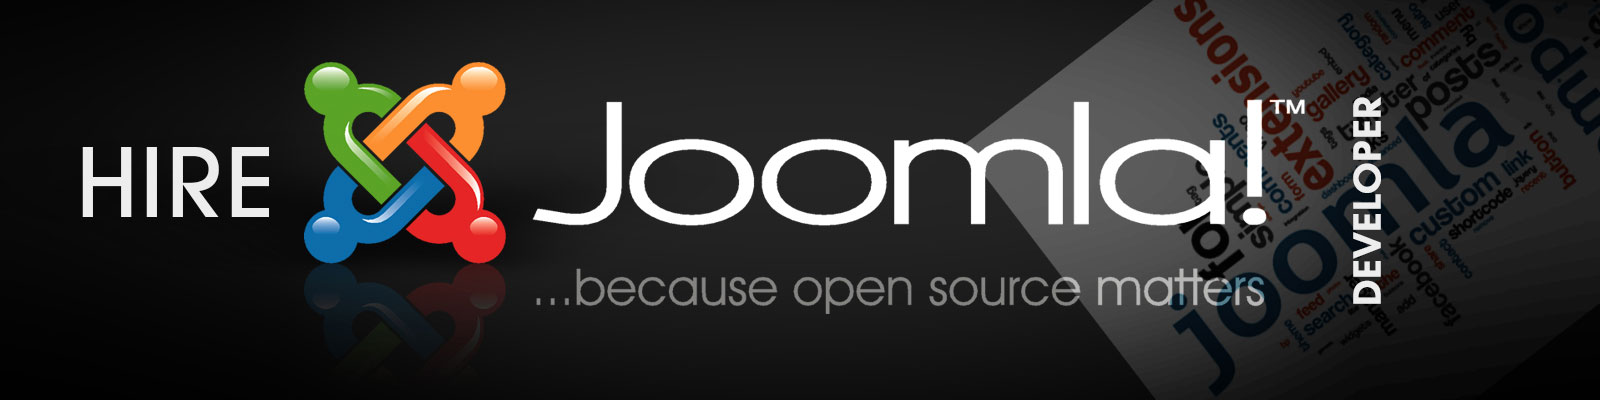 hire joomla developers